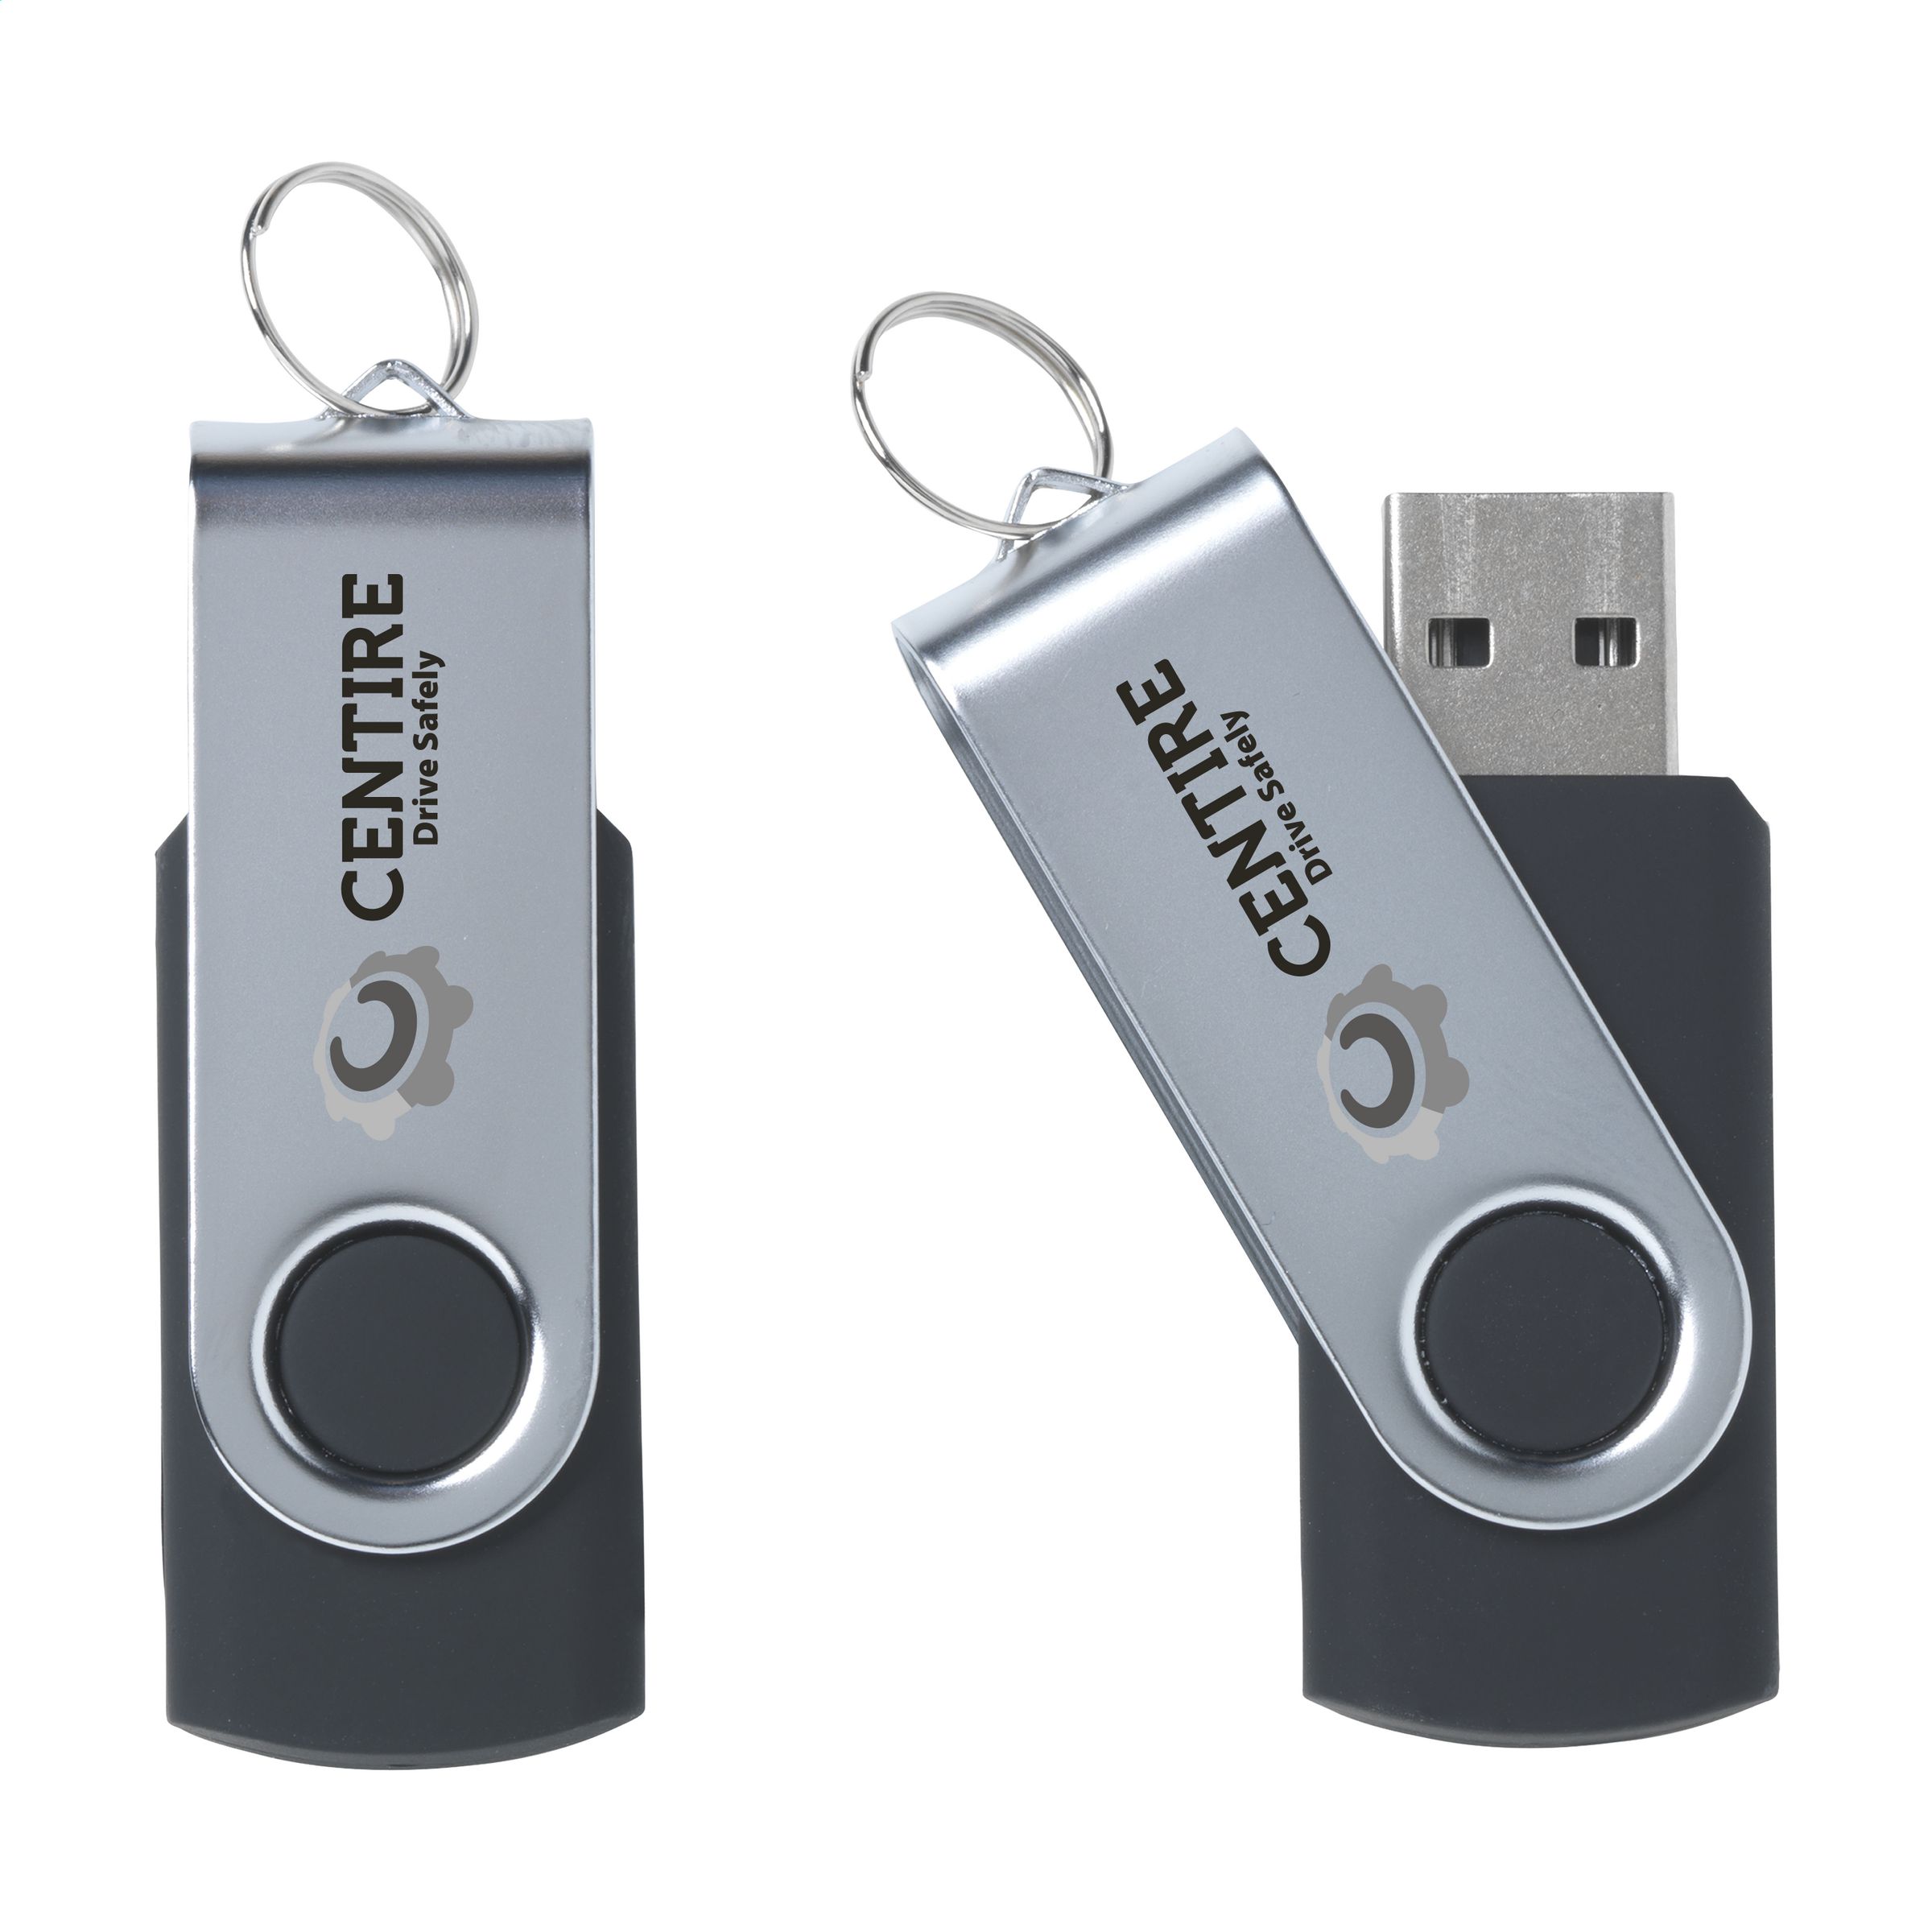 QuickStore USB - Eardisley - Puertollano